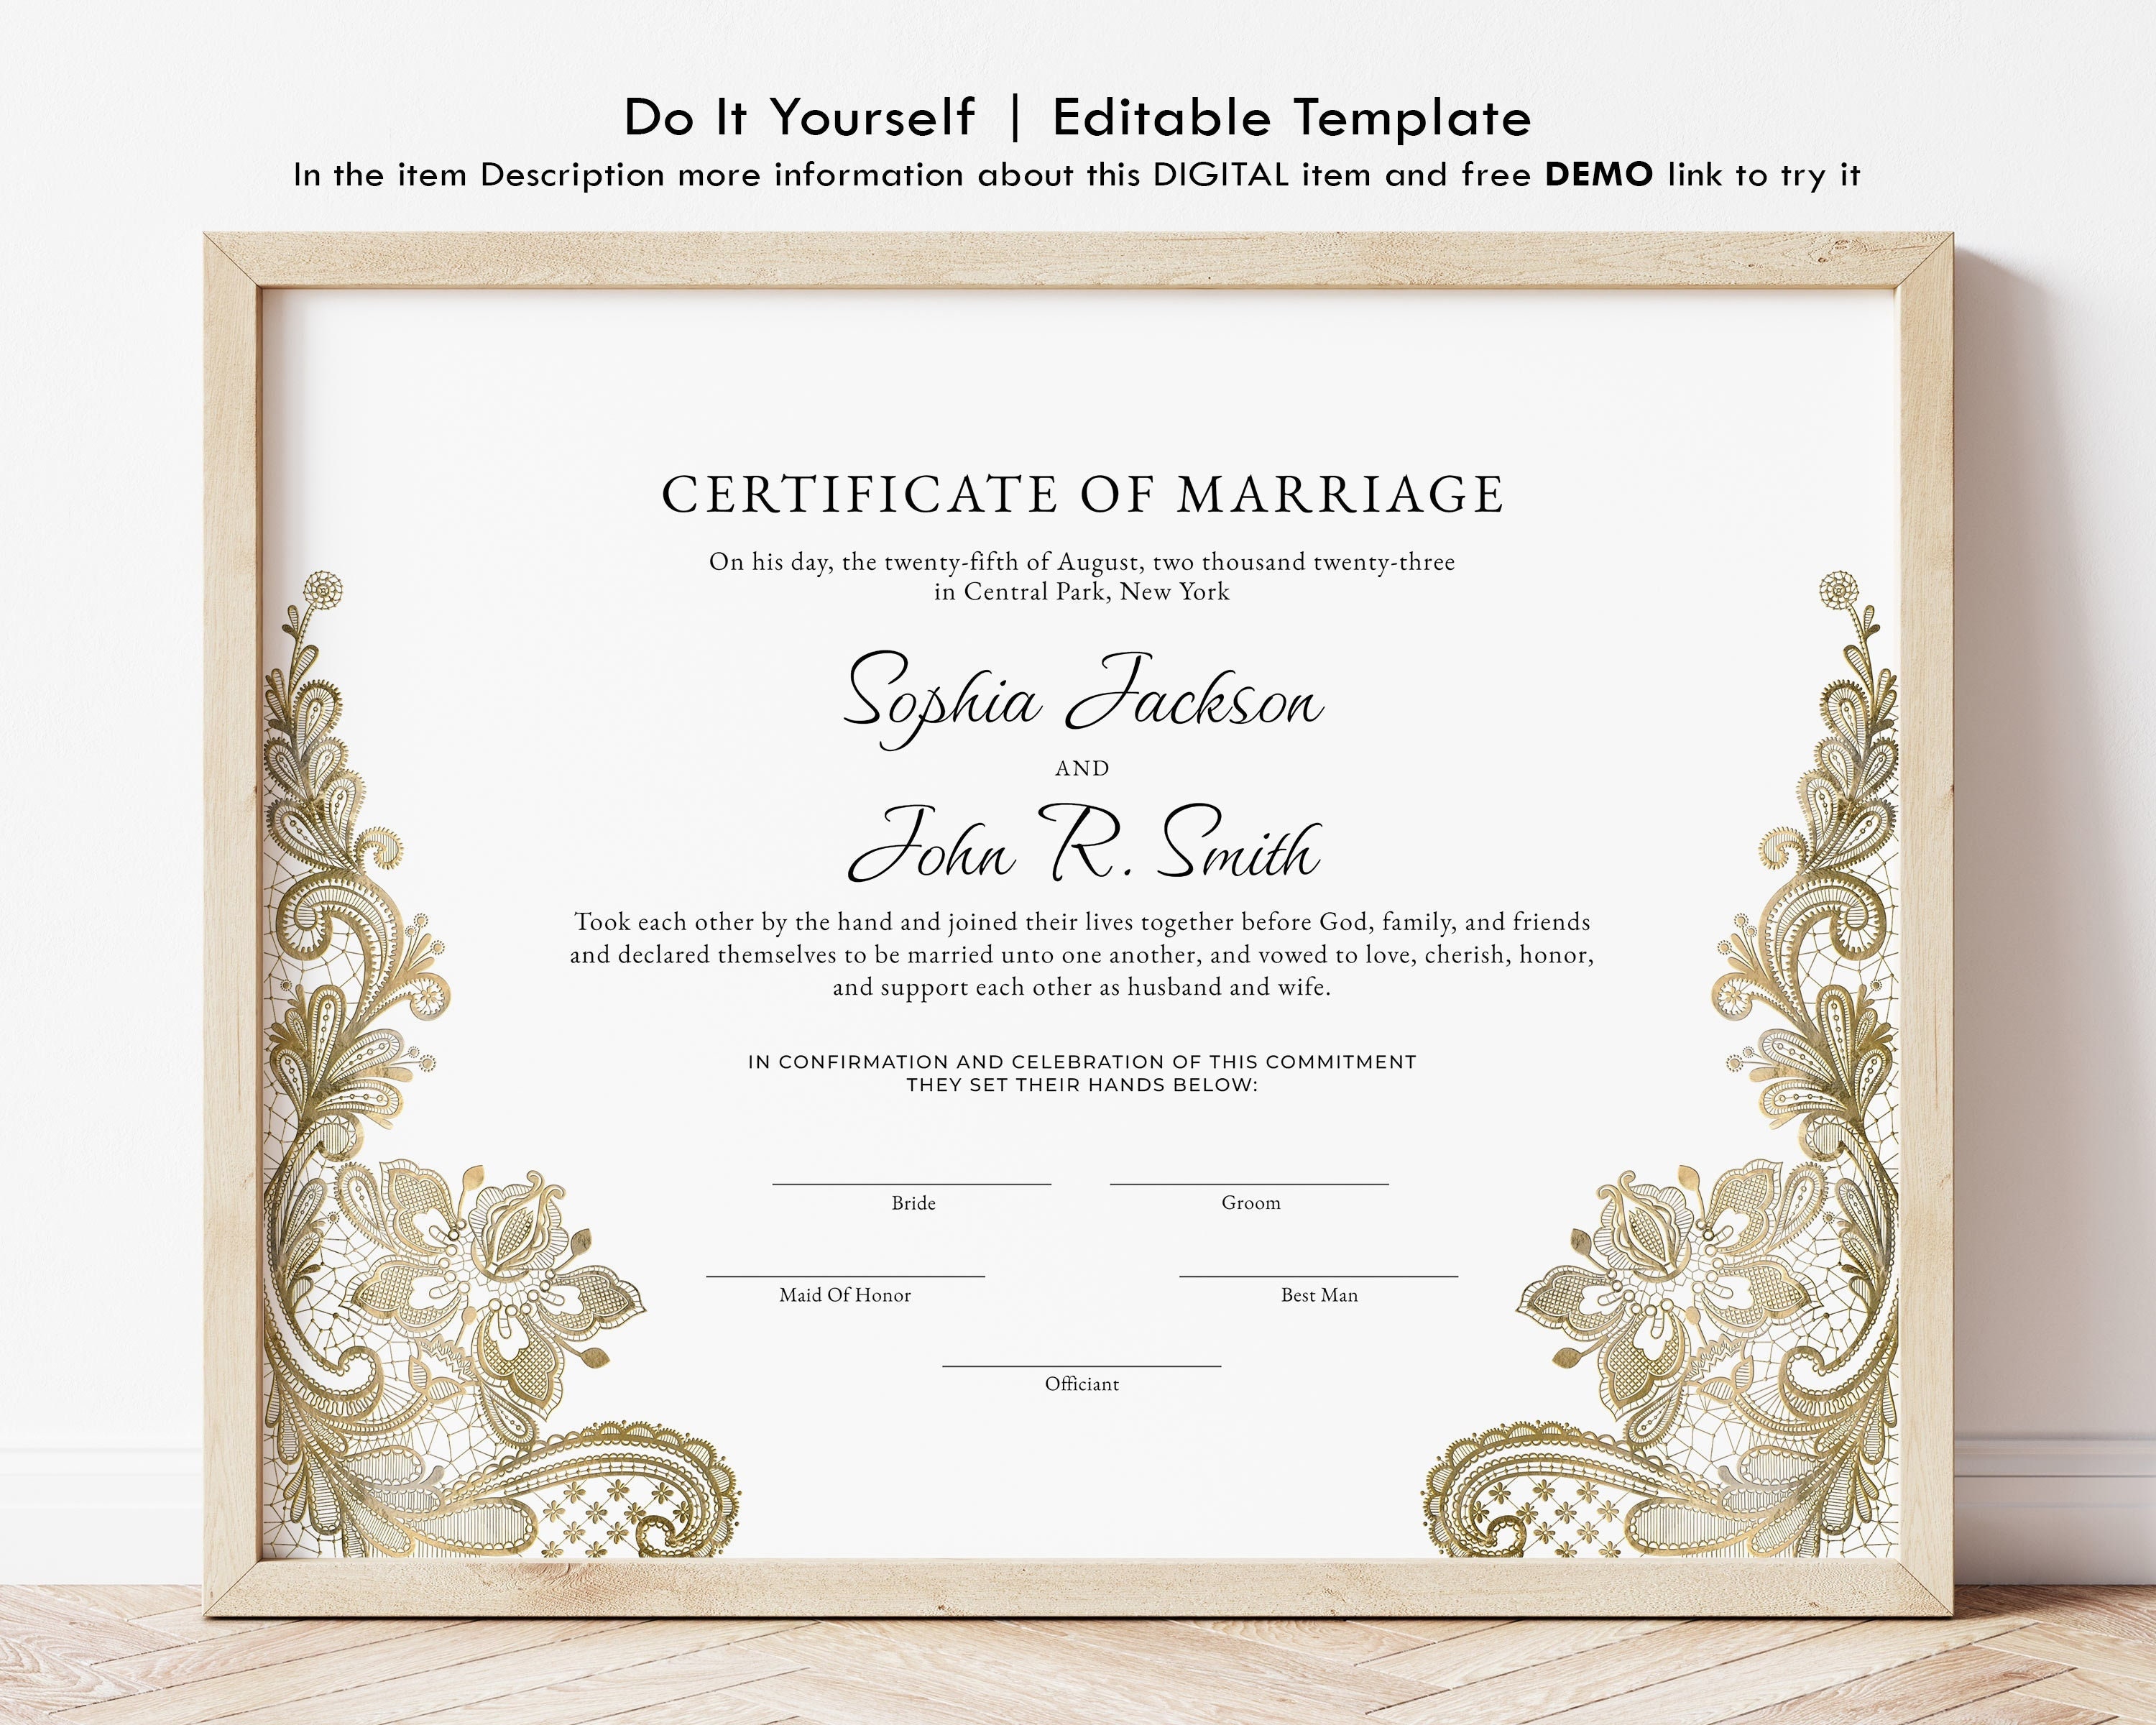 Editable Certificate of Marriage Wedding Keepsake Marriage photo